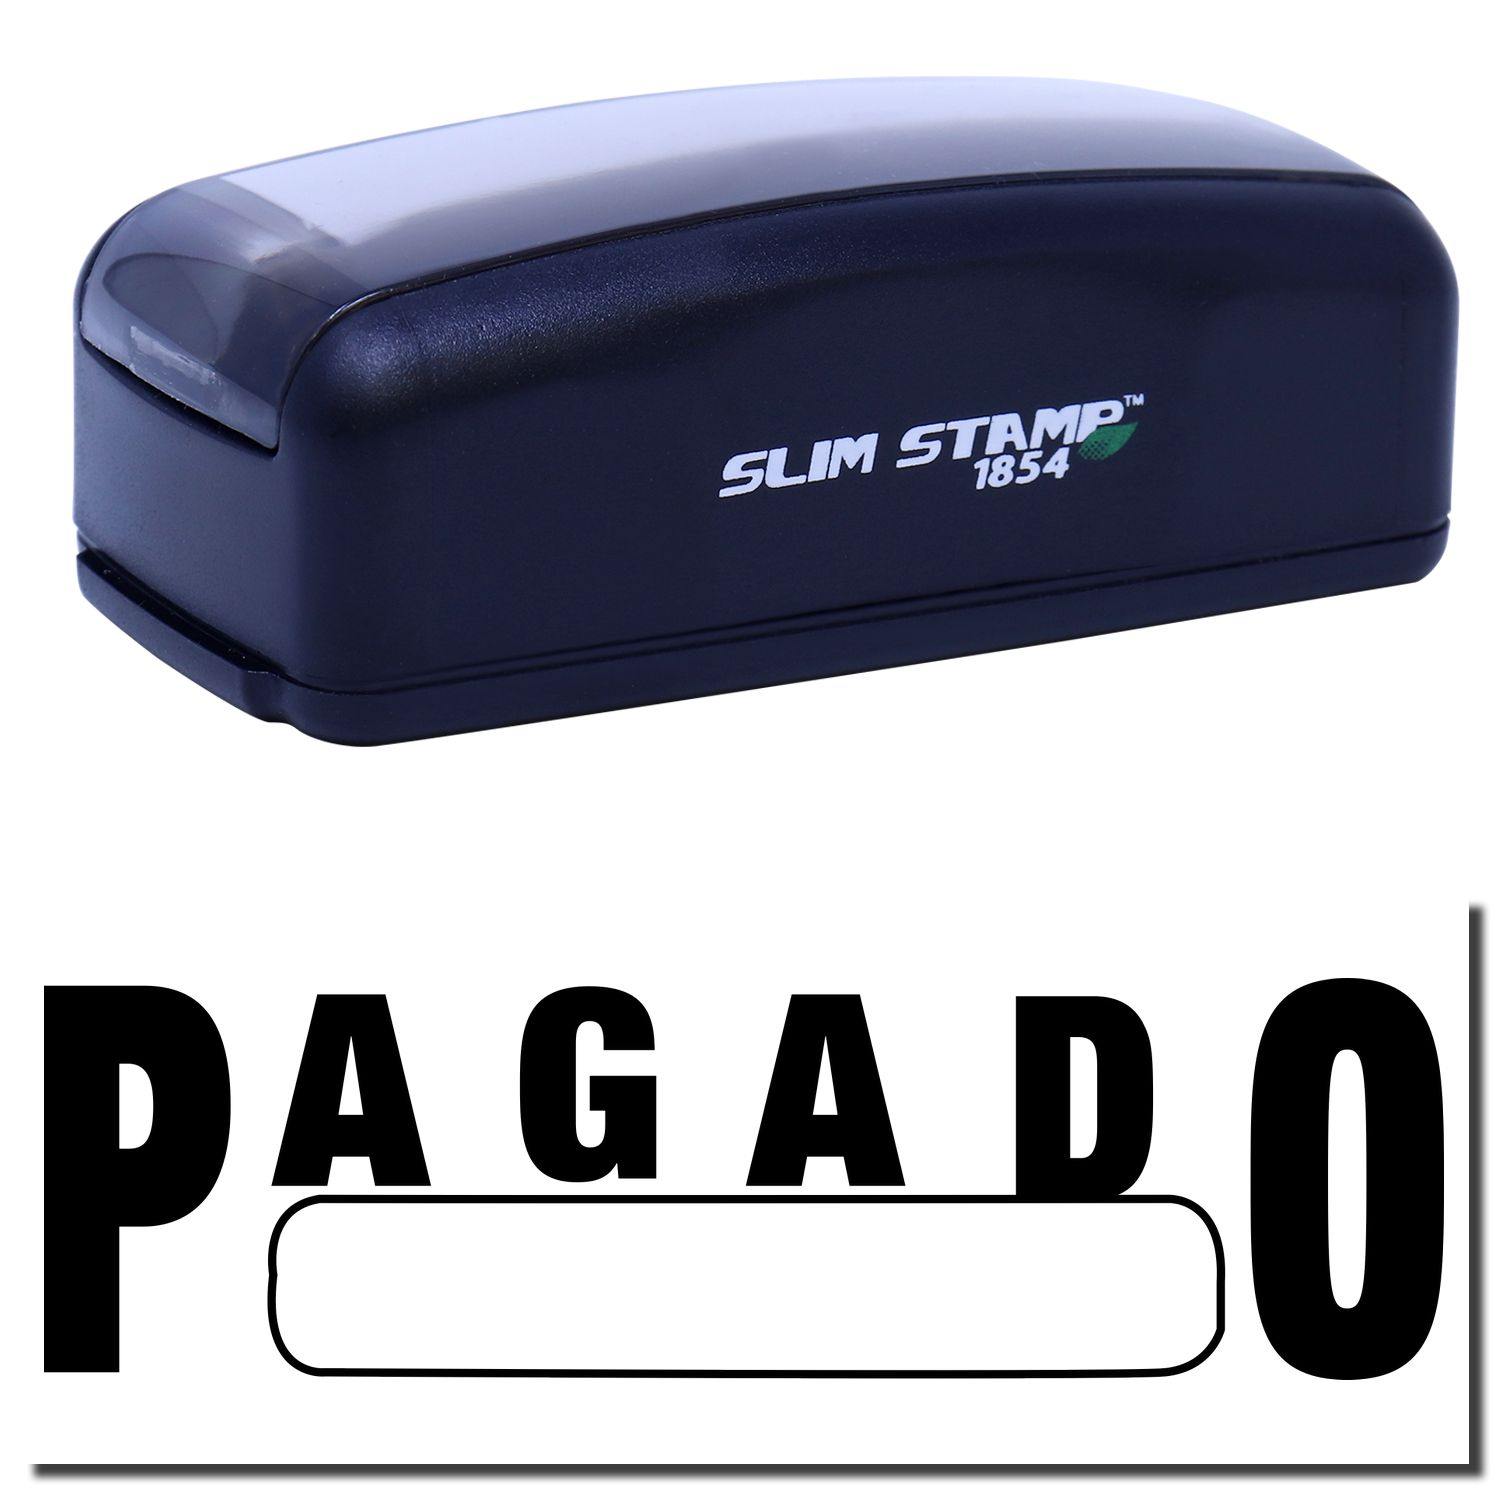 Large Pre-Inked Pagado with Box Stamp Main Image